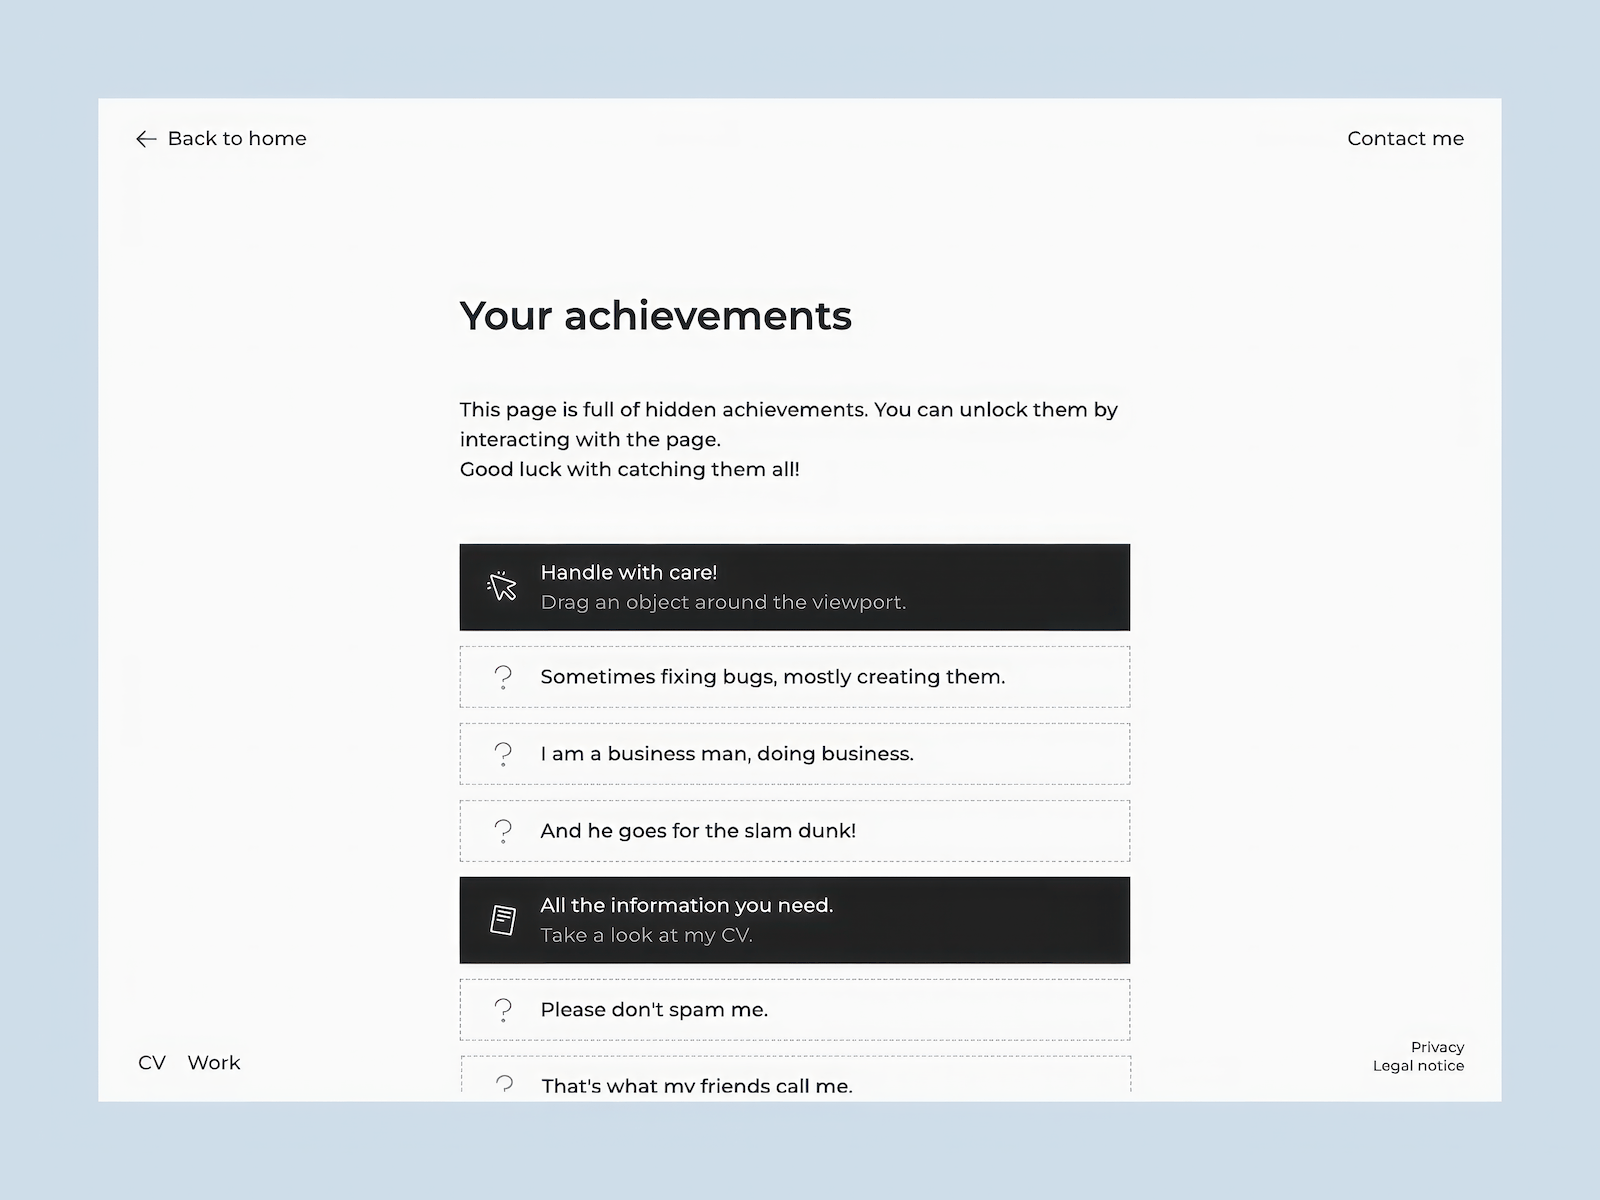 Unlocked achievements overview